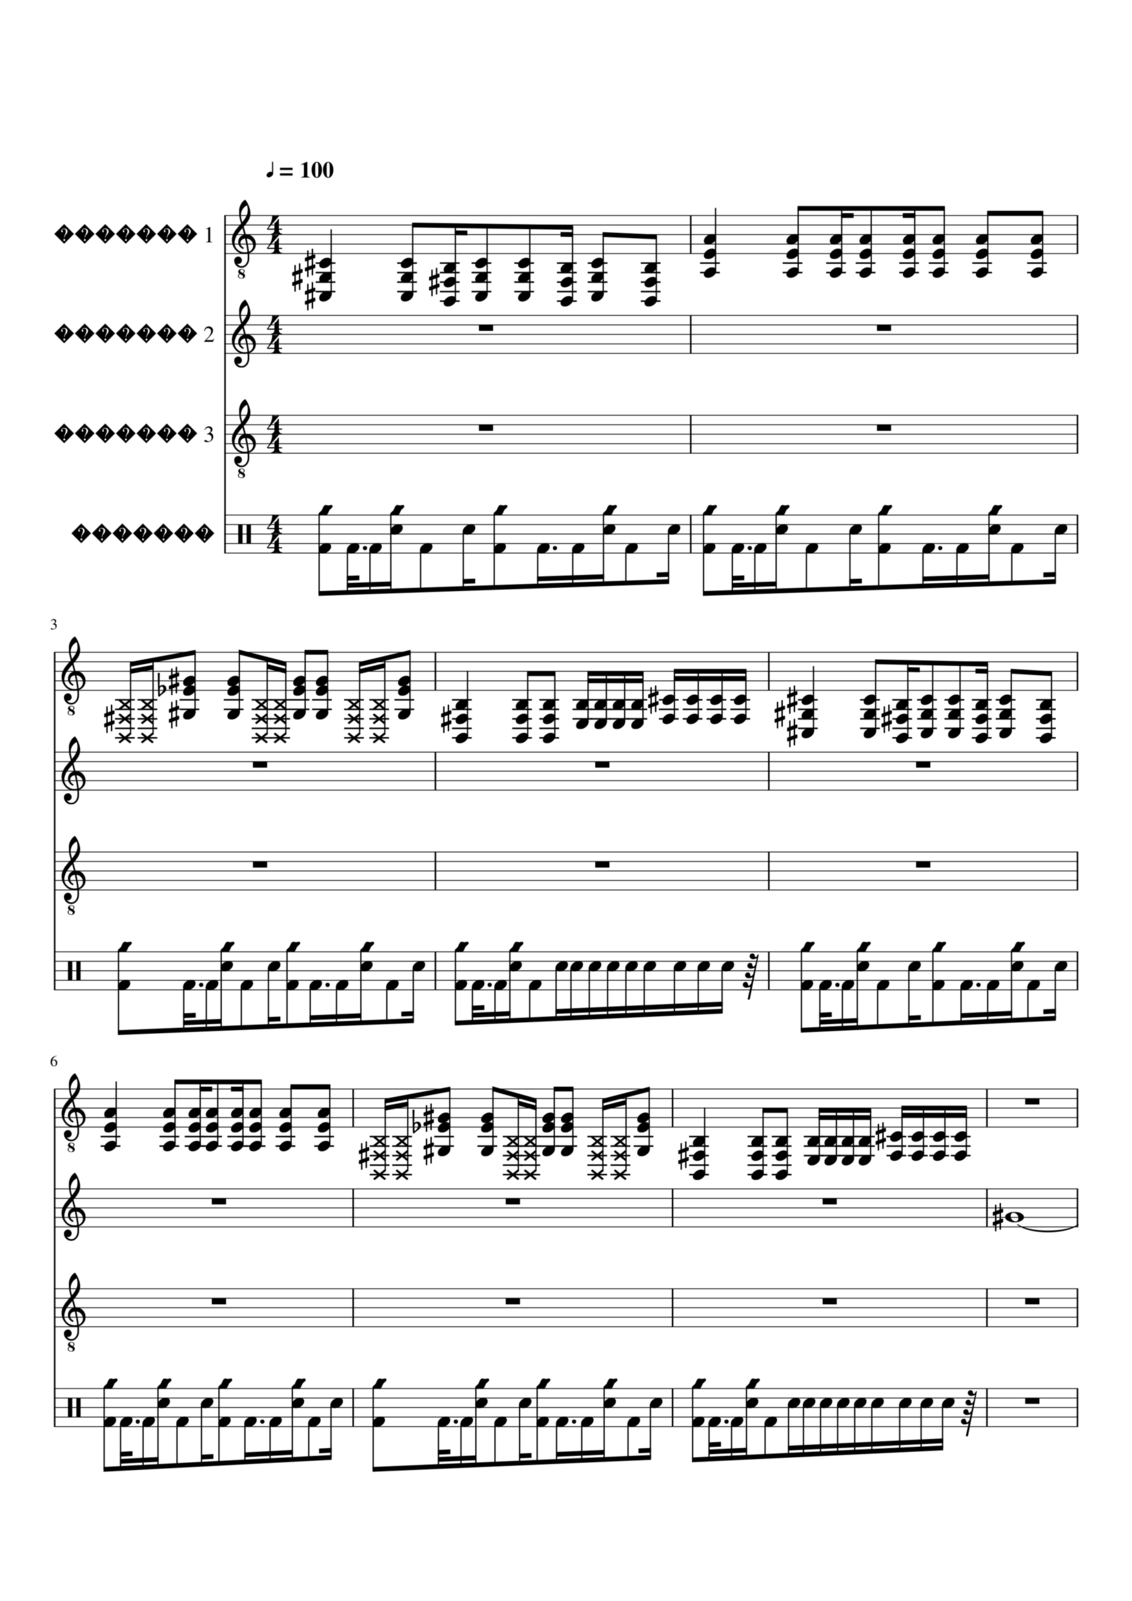 Mertvyie zvezdyi slide, Image 1